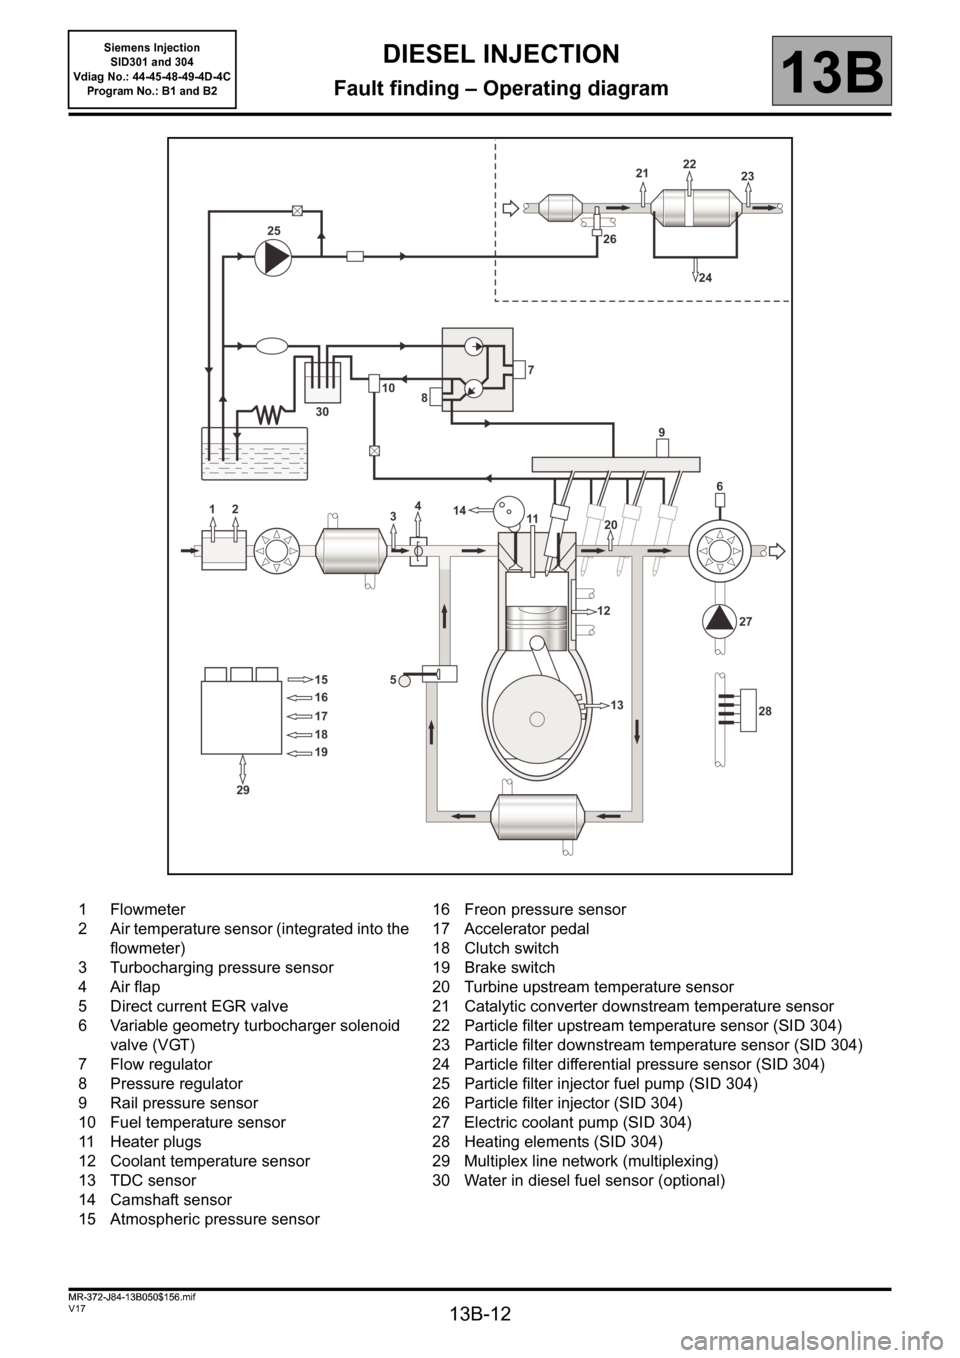 RENAULT SCENIC 2011 J95 / 3.G Engine And Peripherals Siemens Injection User Guide 13B-12
MR-372-J84-13B050$156.mif
V17
13B
DIESEL INJECTION
Fault finding – Operating diagram
1 Flowmeter
2 Air temperature sensor (integrated into the 
flowmeter)
3 Turbocharging pressure sensor
4 Ai